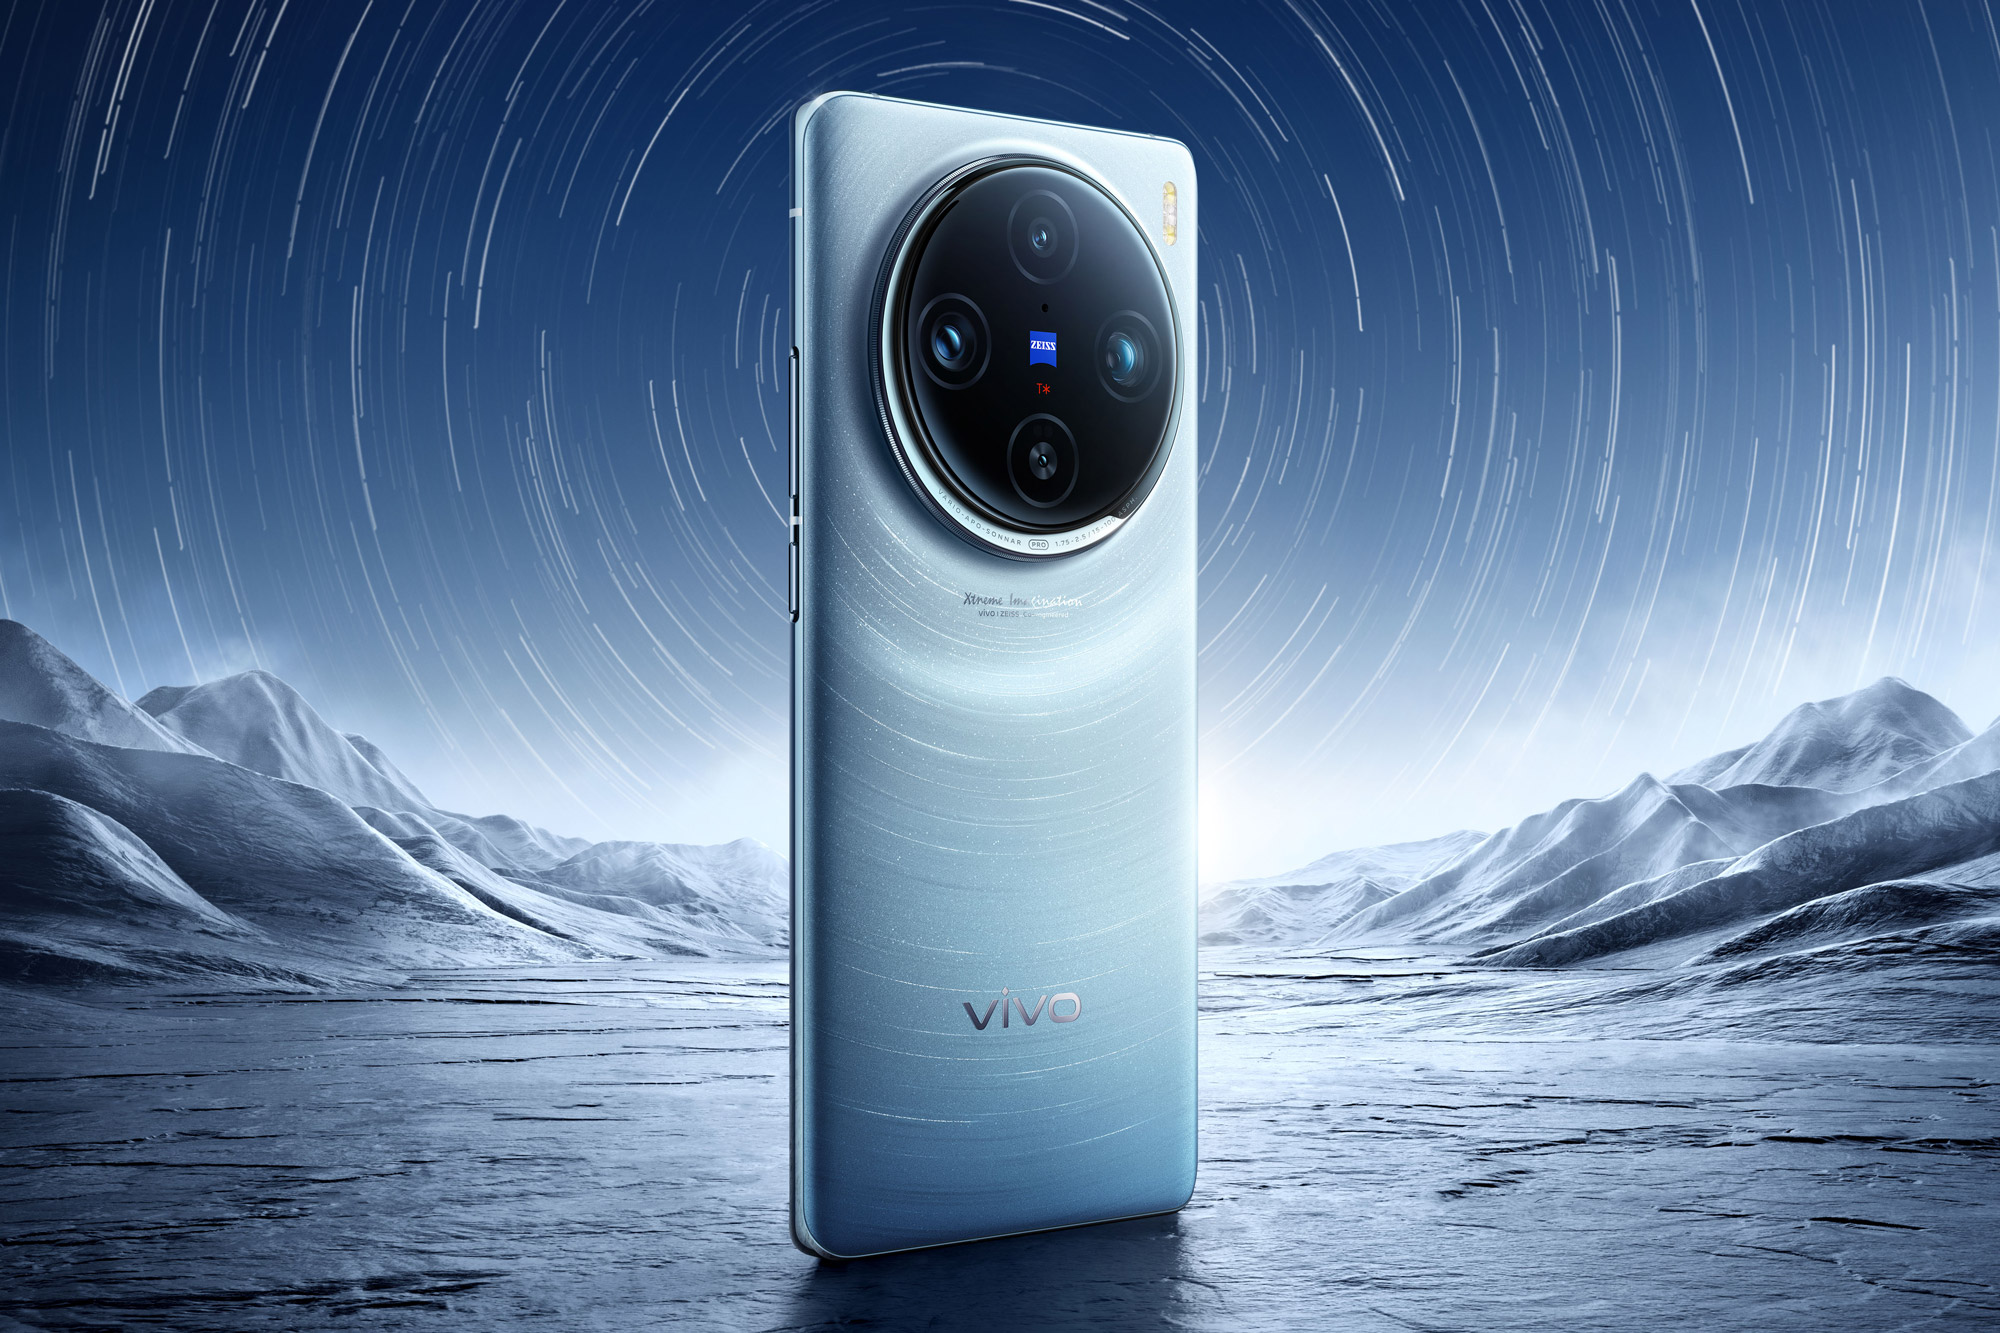 Dimensity 9300, 16 GB RAM and 1 TB storage: Vivo X100 in the performance  test!